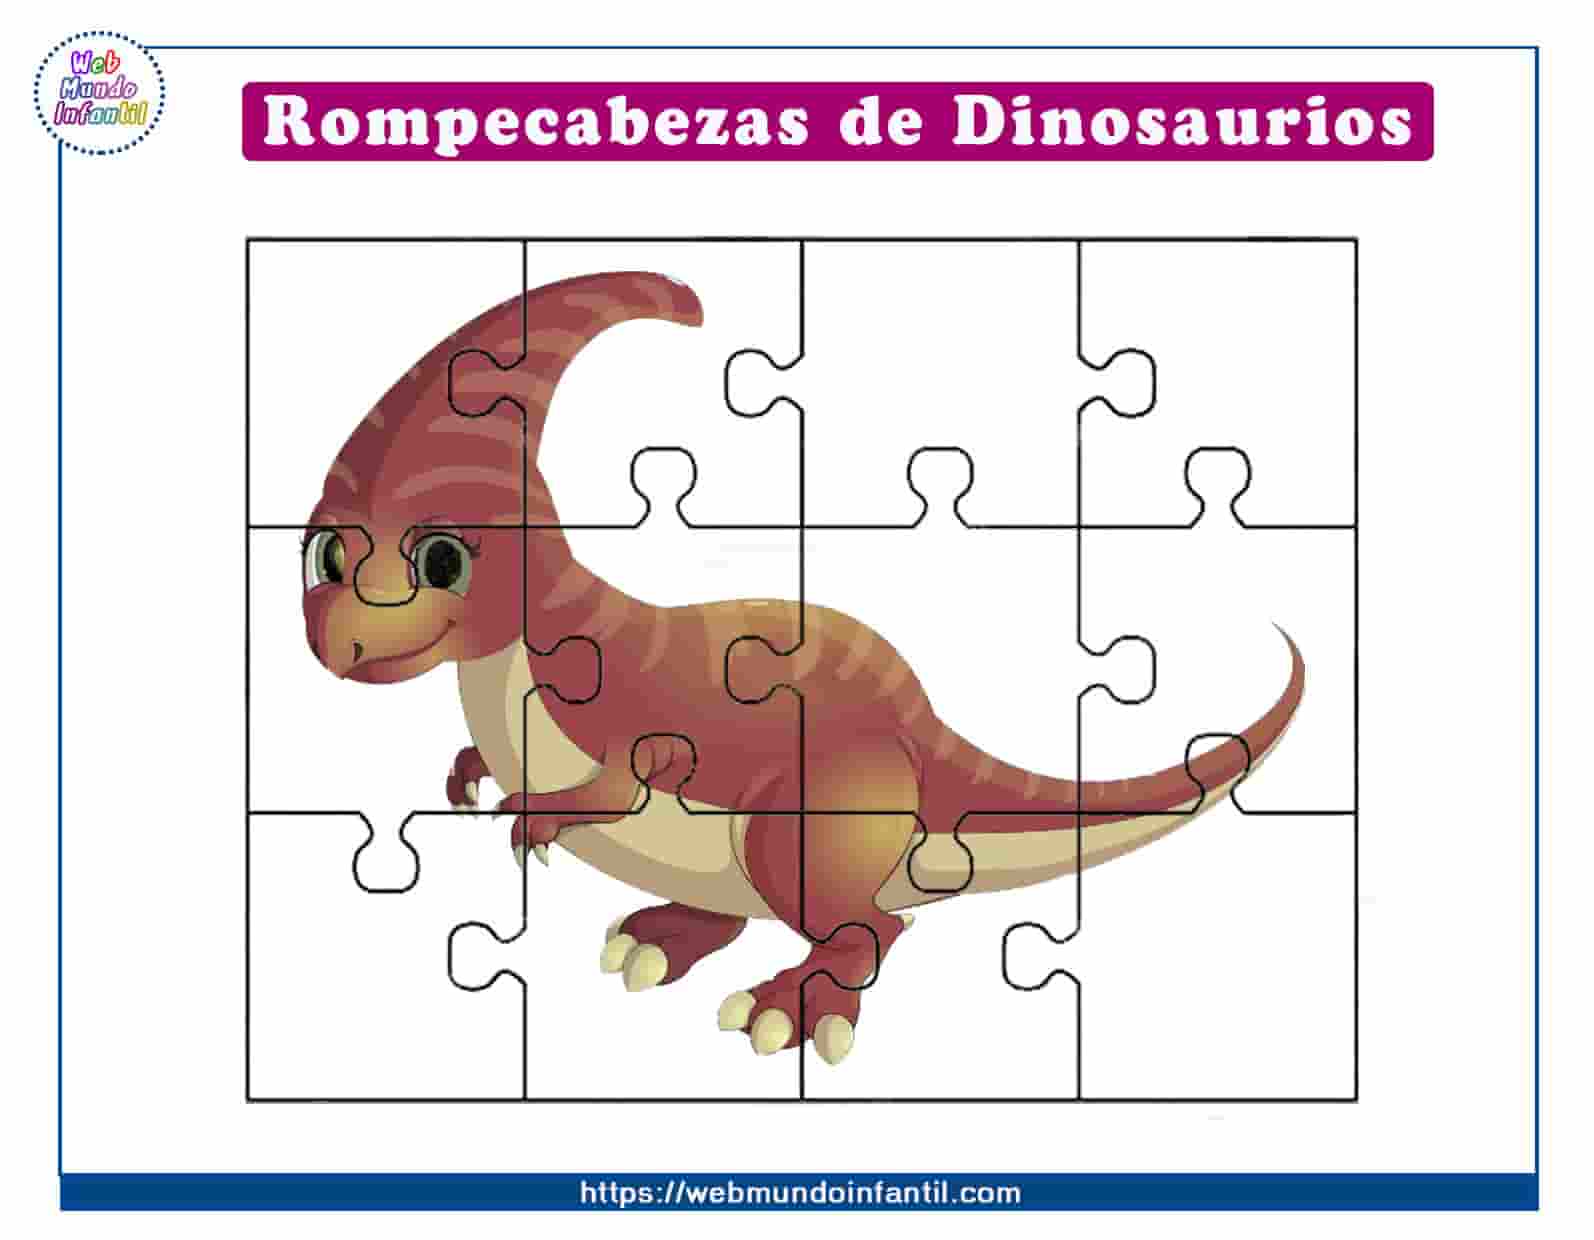 Rompecabezas de dinosaurios para imprimir [Puzzles]